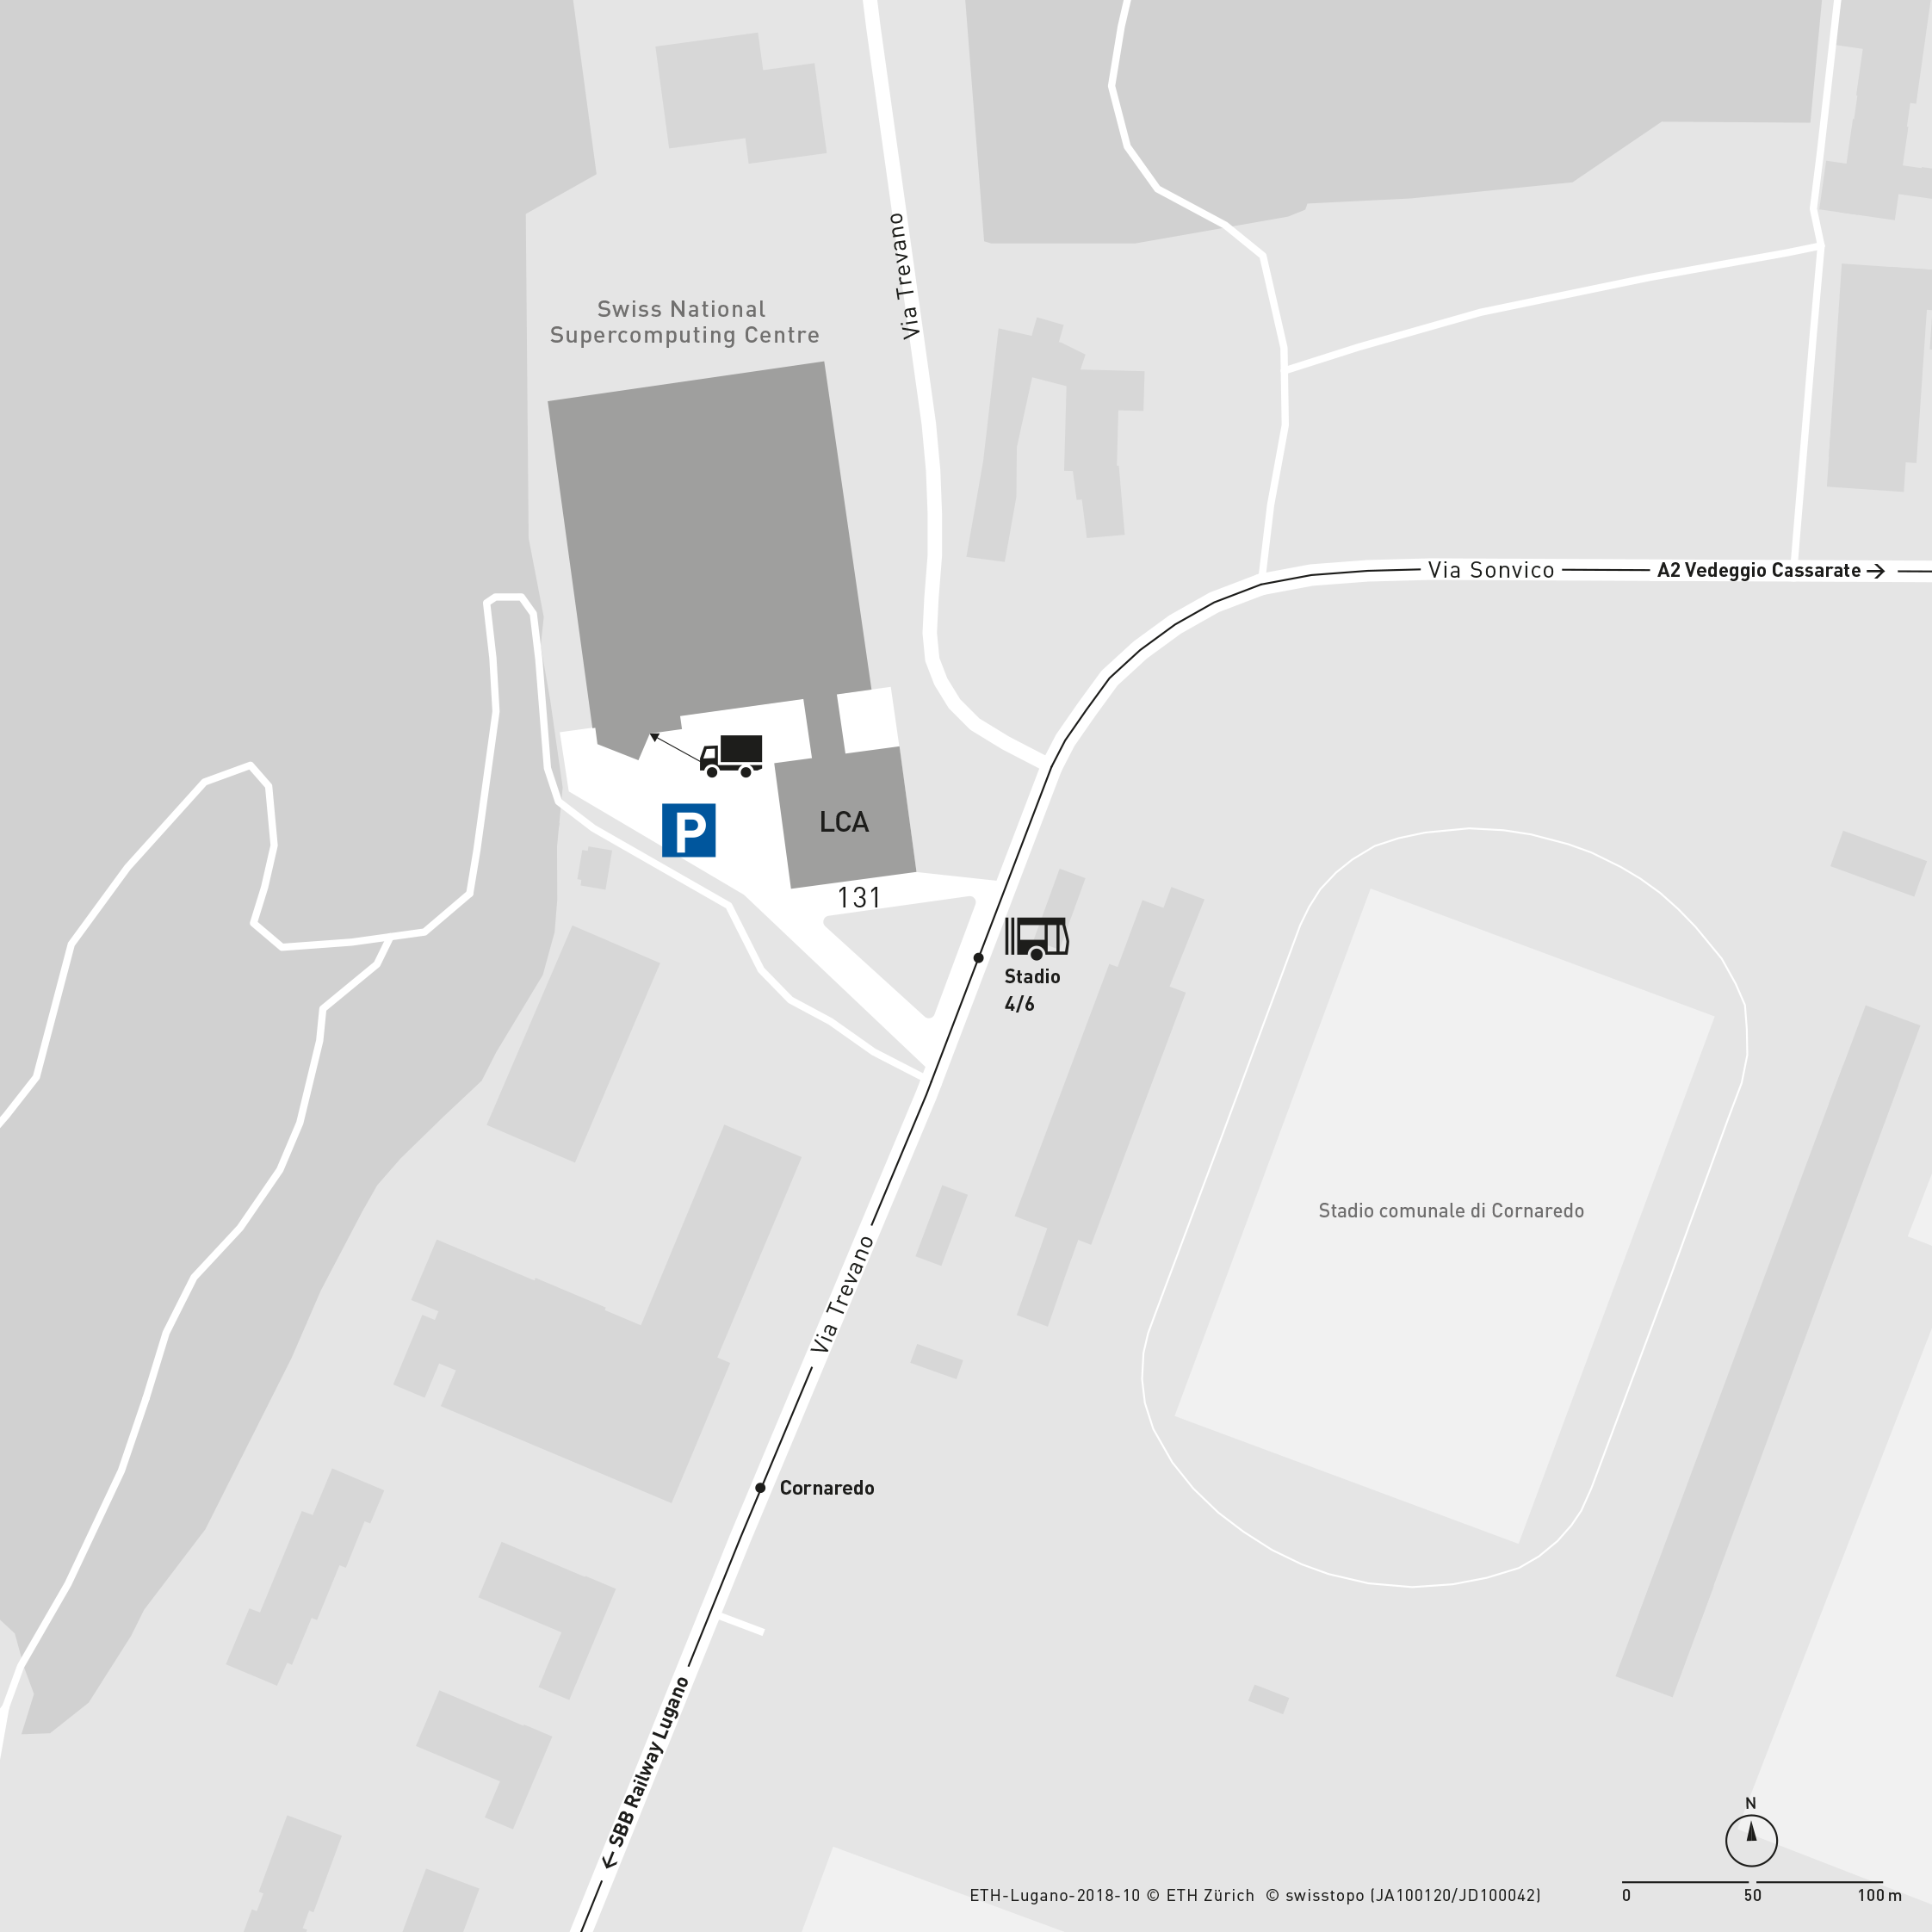 Enlarged view: Area plan CSCS Lugano